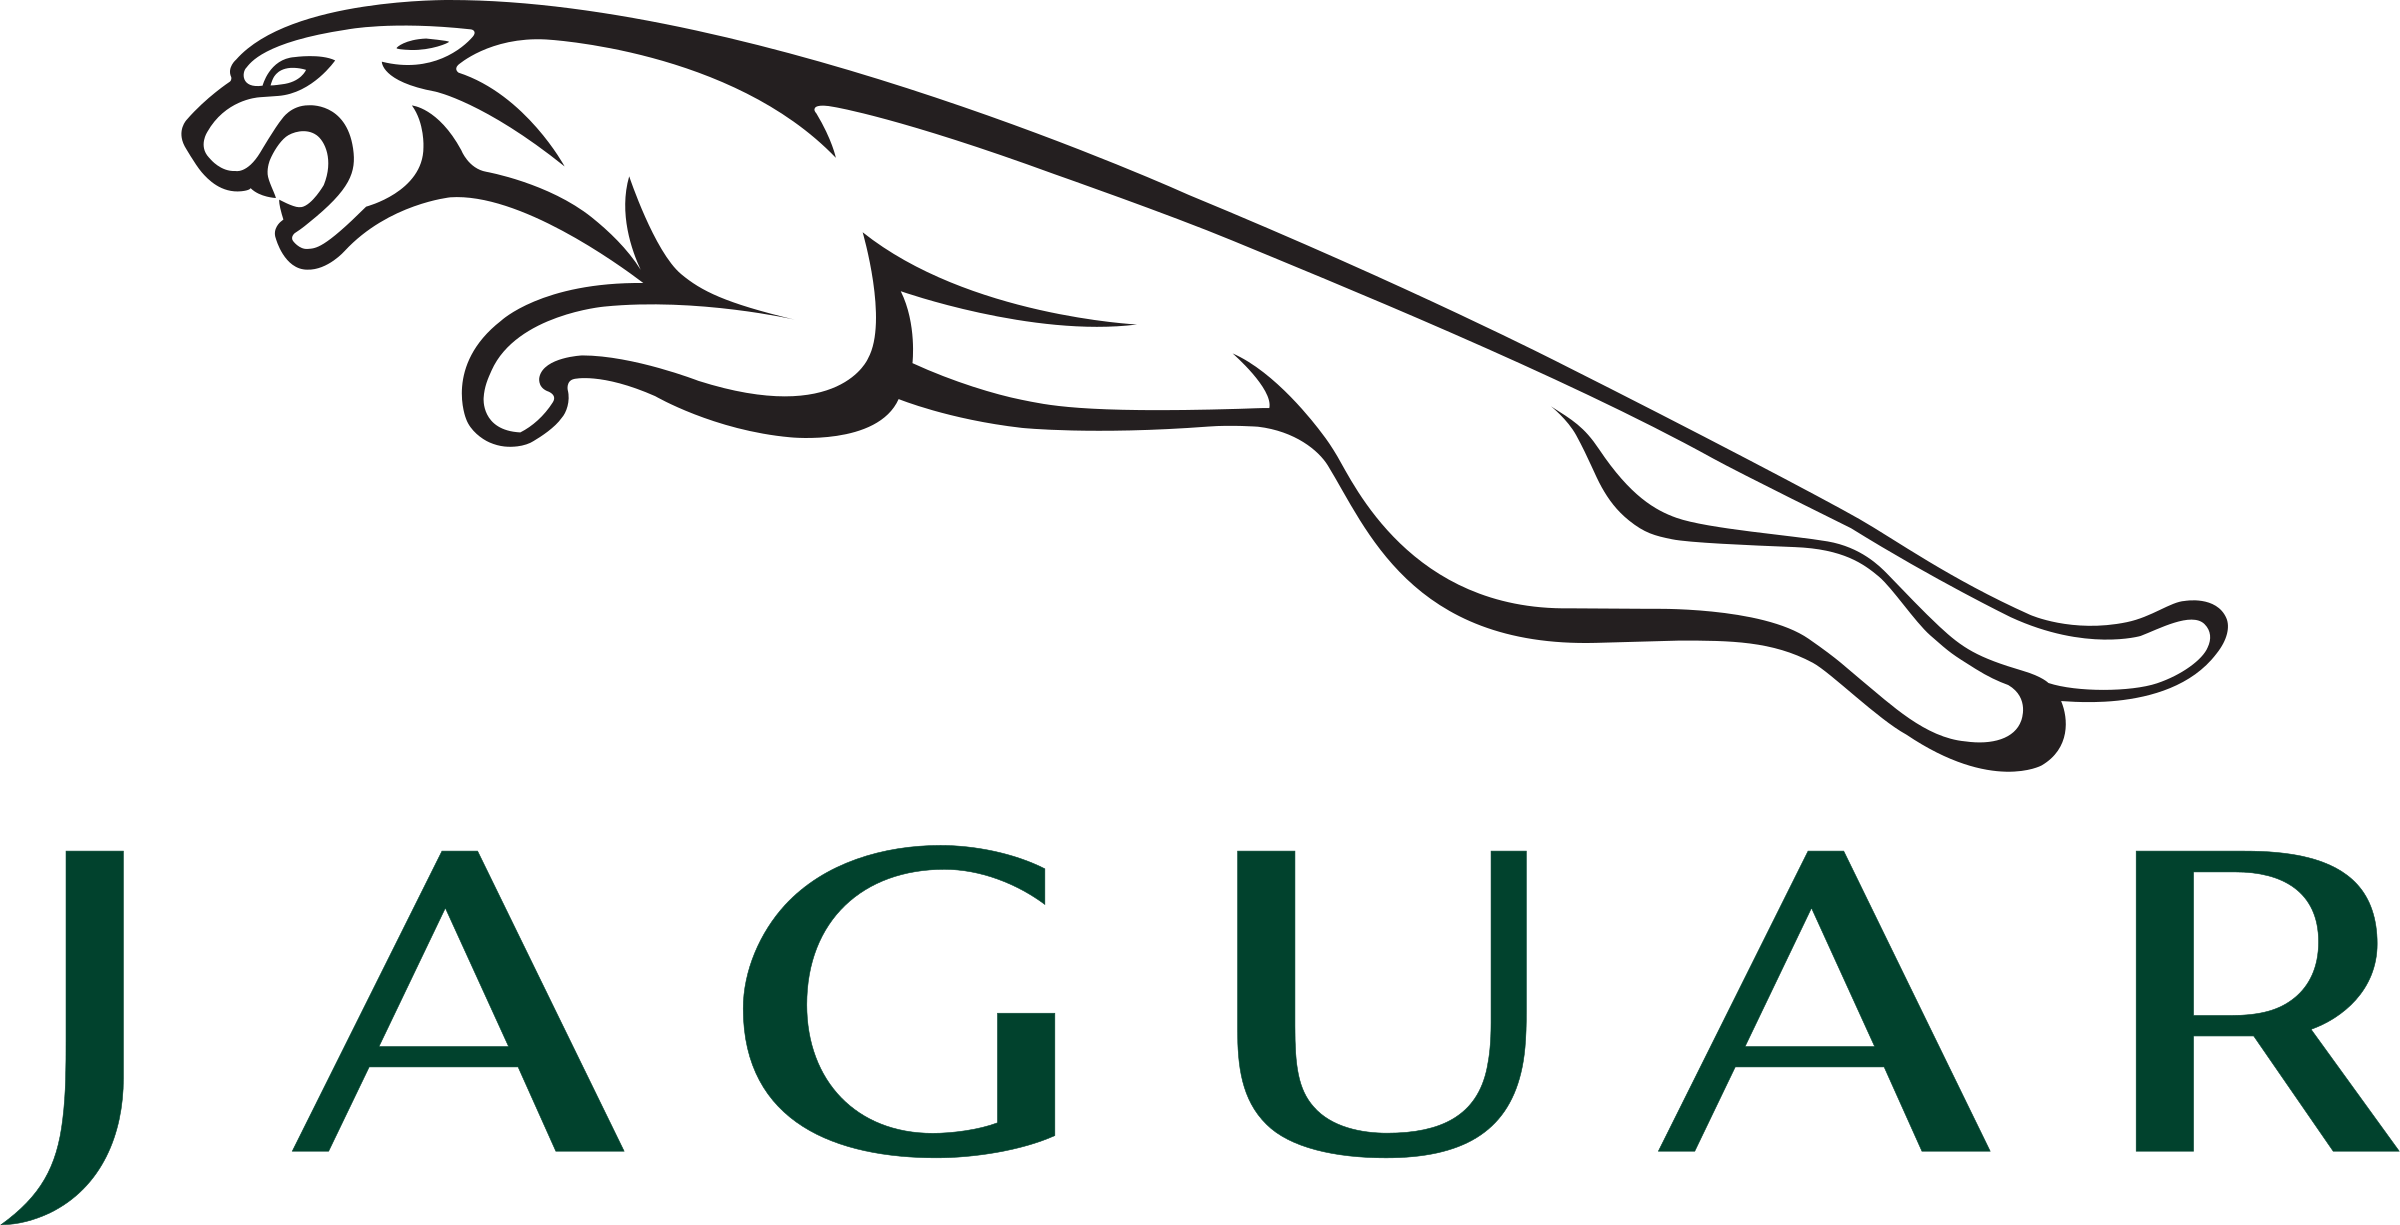 Jaguar Car Logo - Jaguar Cars Logo PNG Transparent & SVG Vector - Freebie Supply